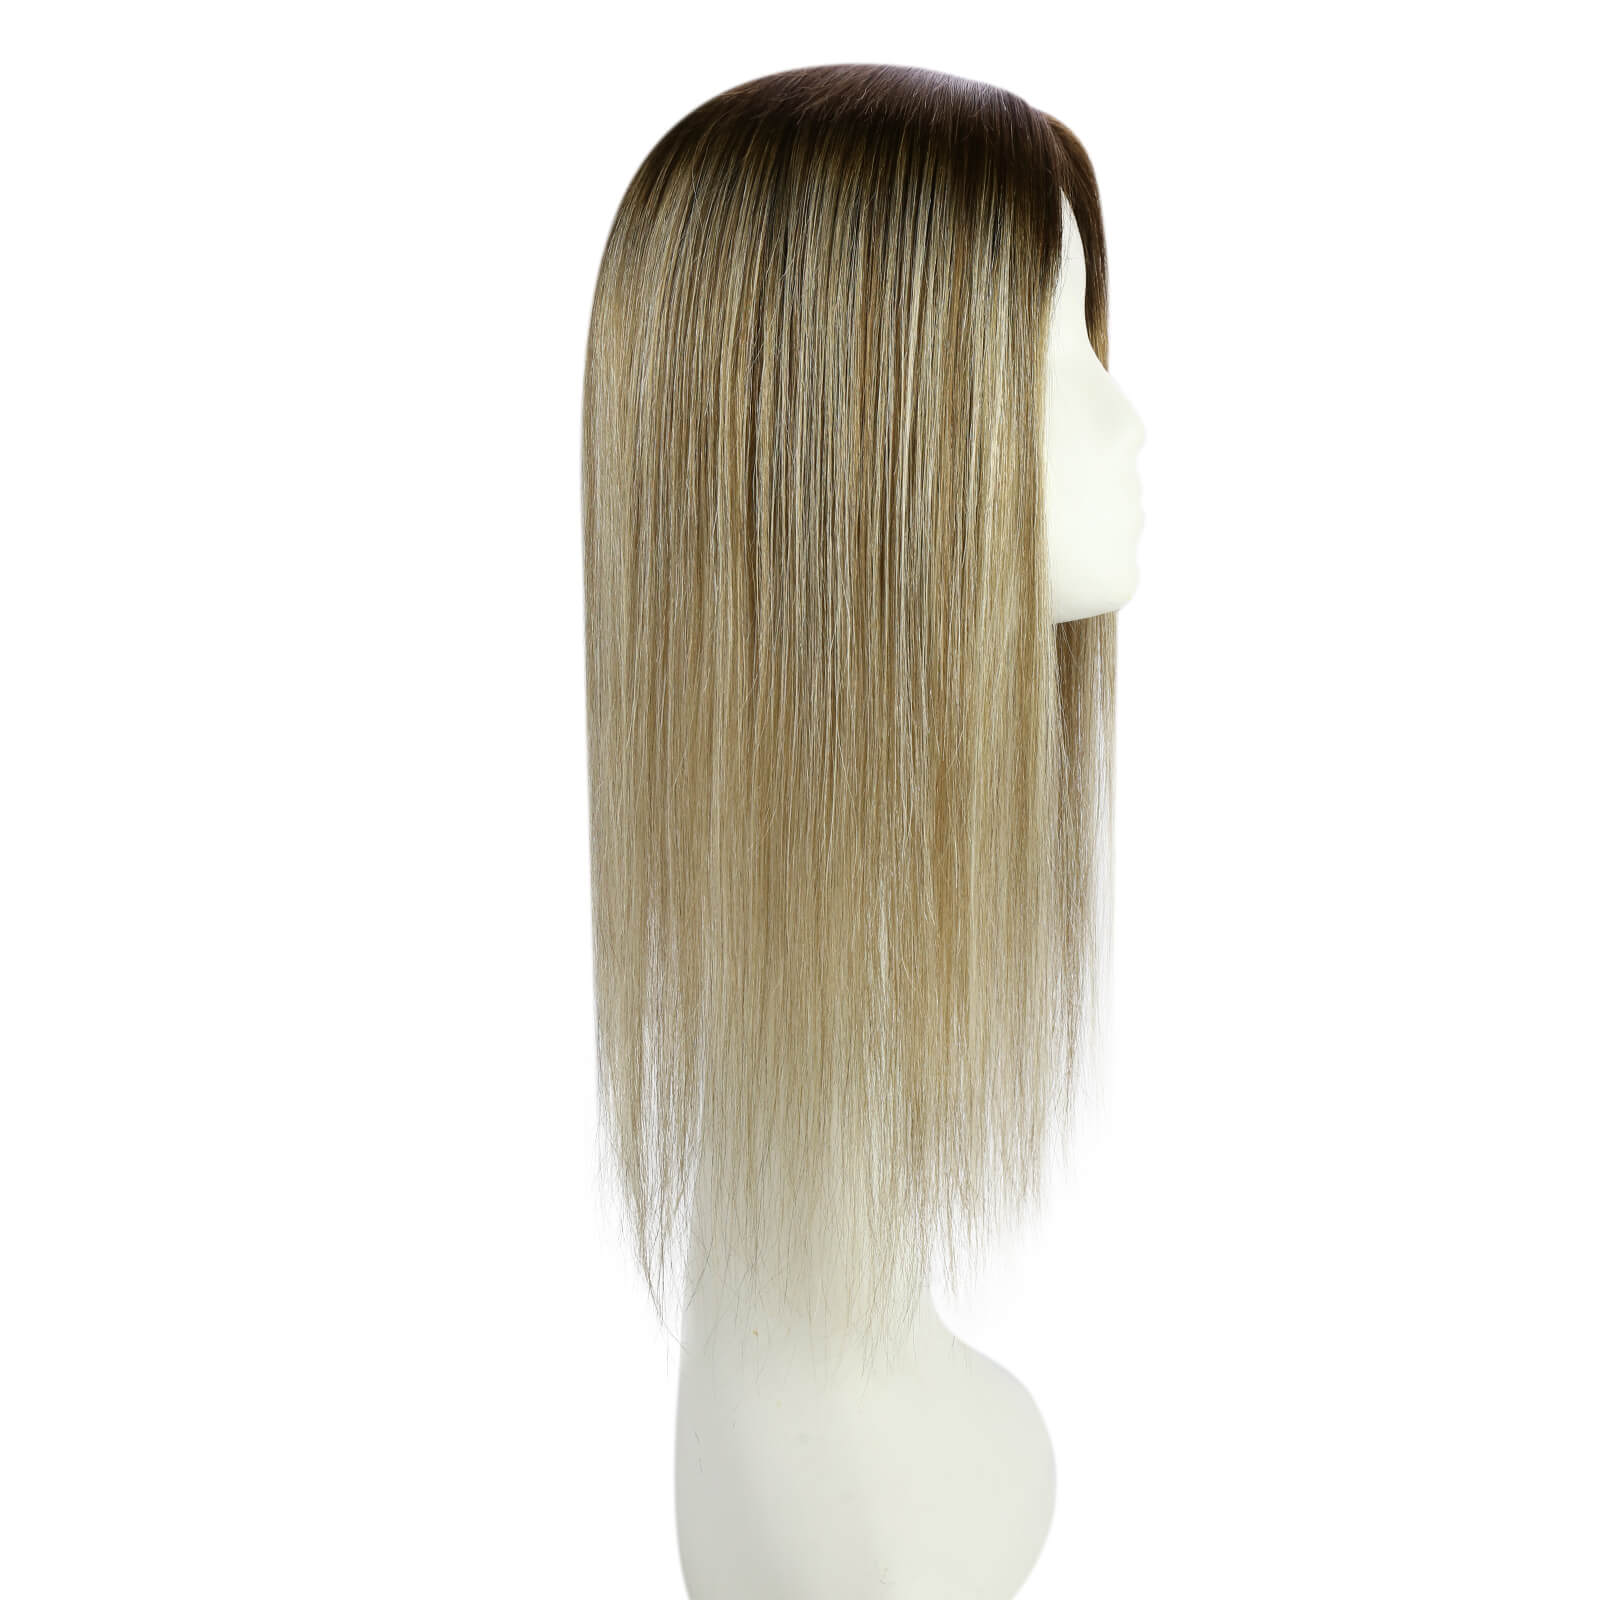 blonde hairbuns hairpiece 100% human hair topper